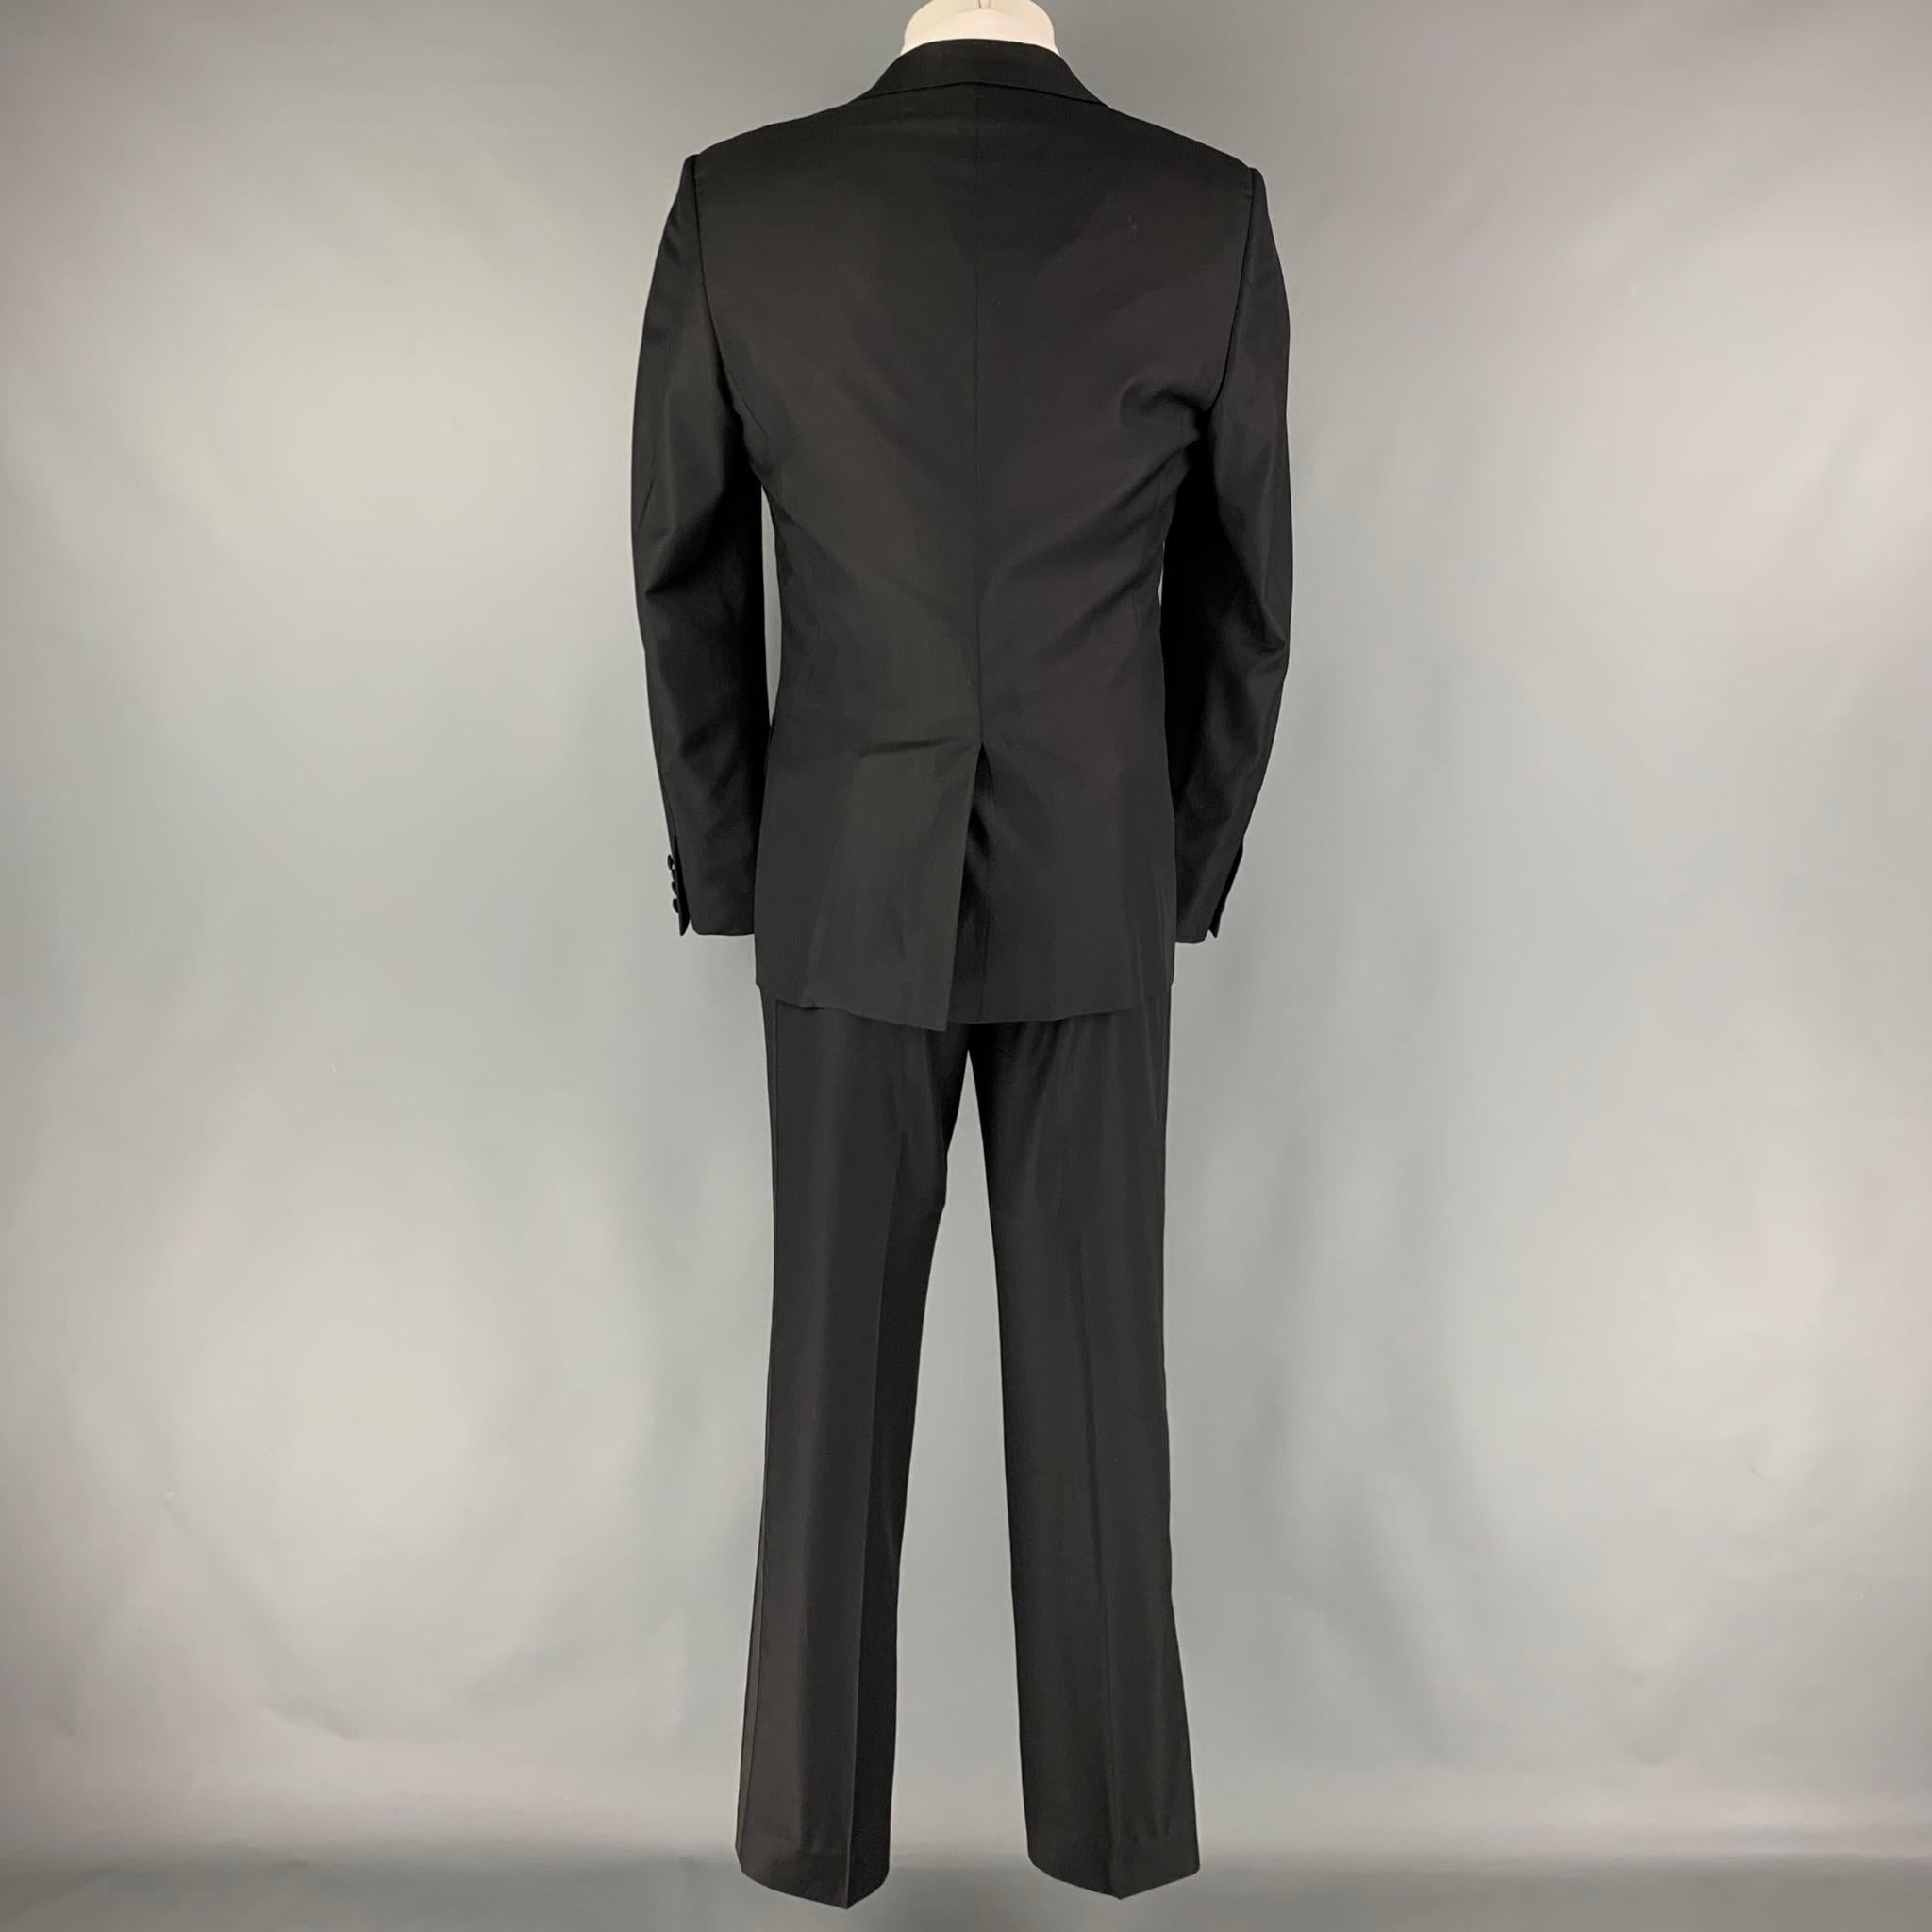 CALVIN KLEIN COLLECTION Size 38 Black Solid Wool Peak Lapel 32 32 Tuxedo 2